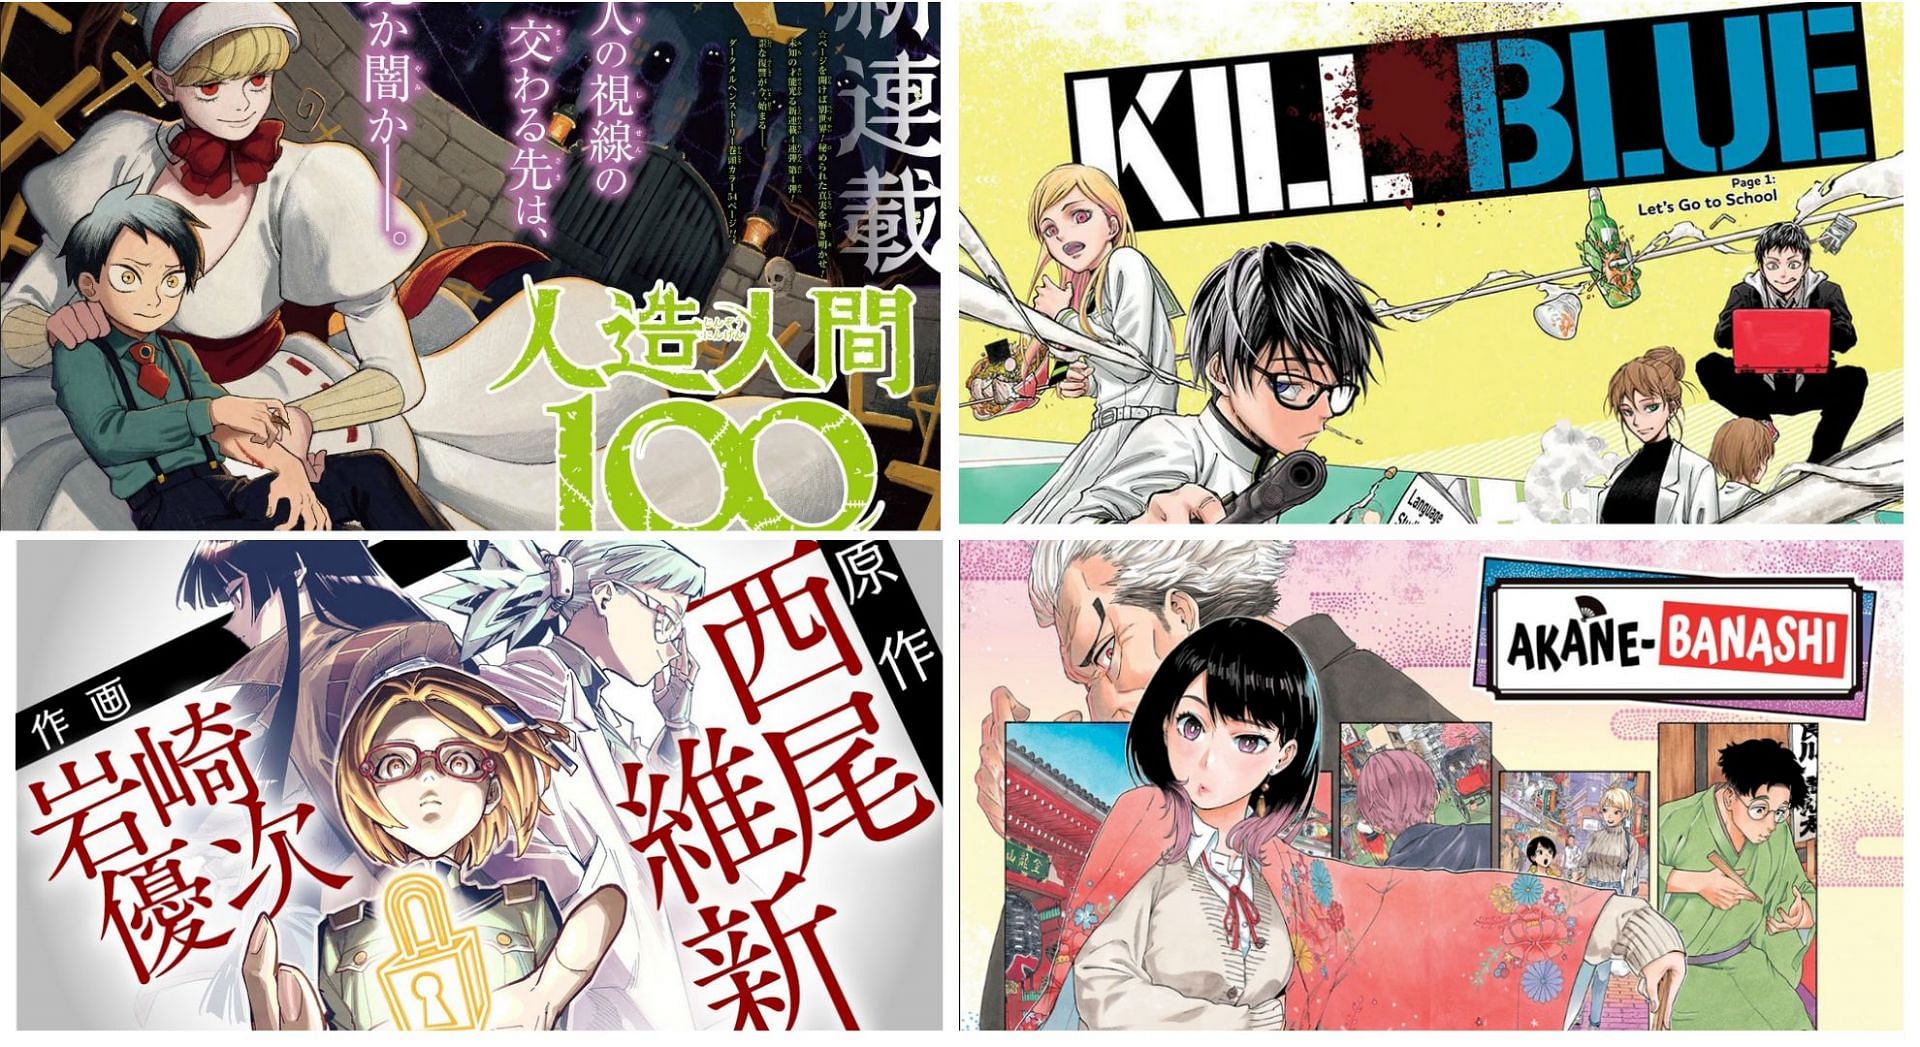 Hajime no Ippo Boxing Manga Has Sold Over 100 Million Copies